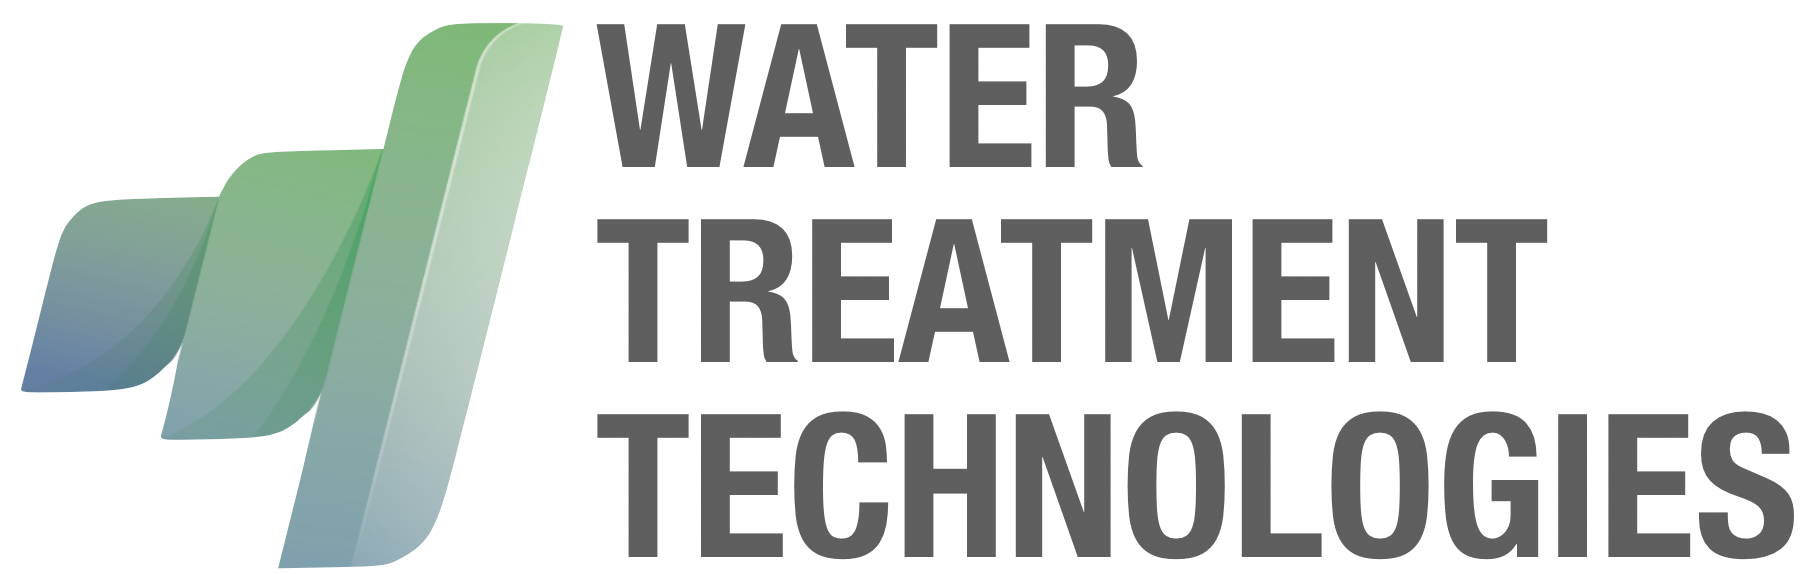 Water Treatment Technologies